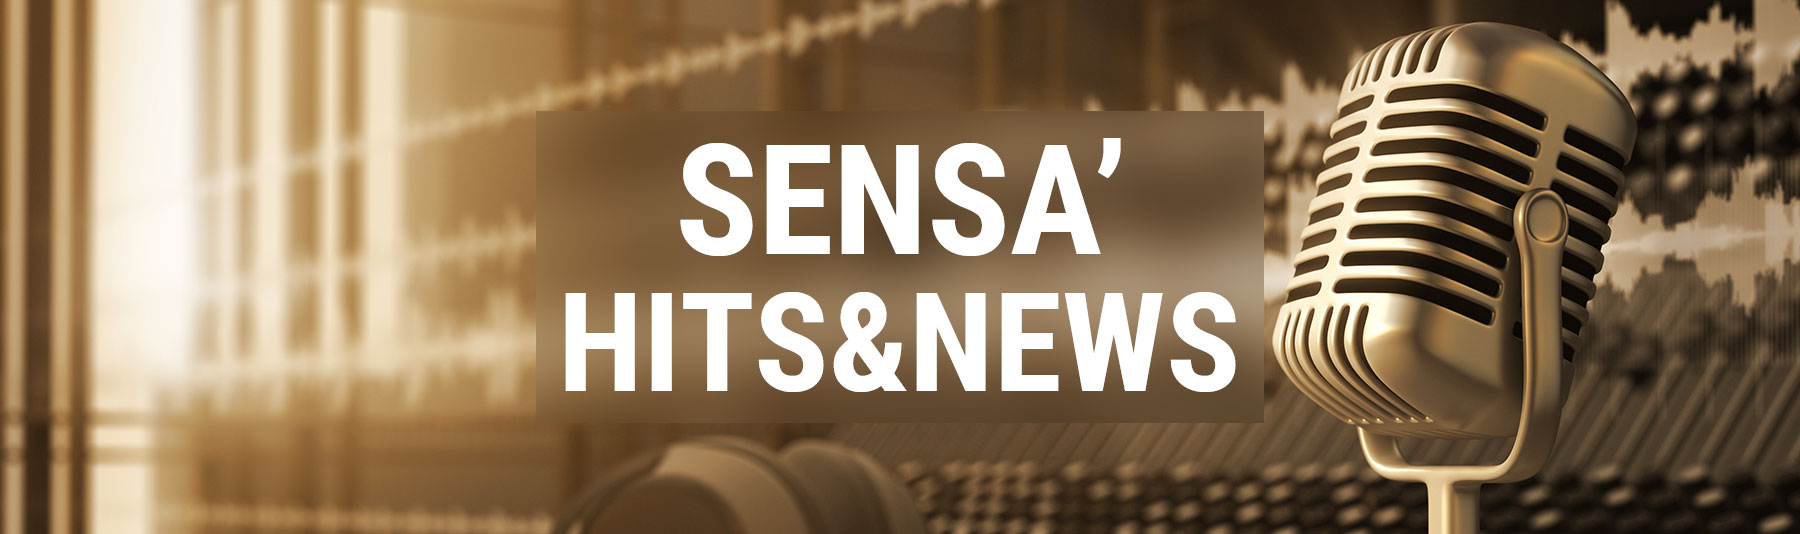 Sensa' Hits & News